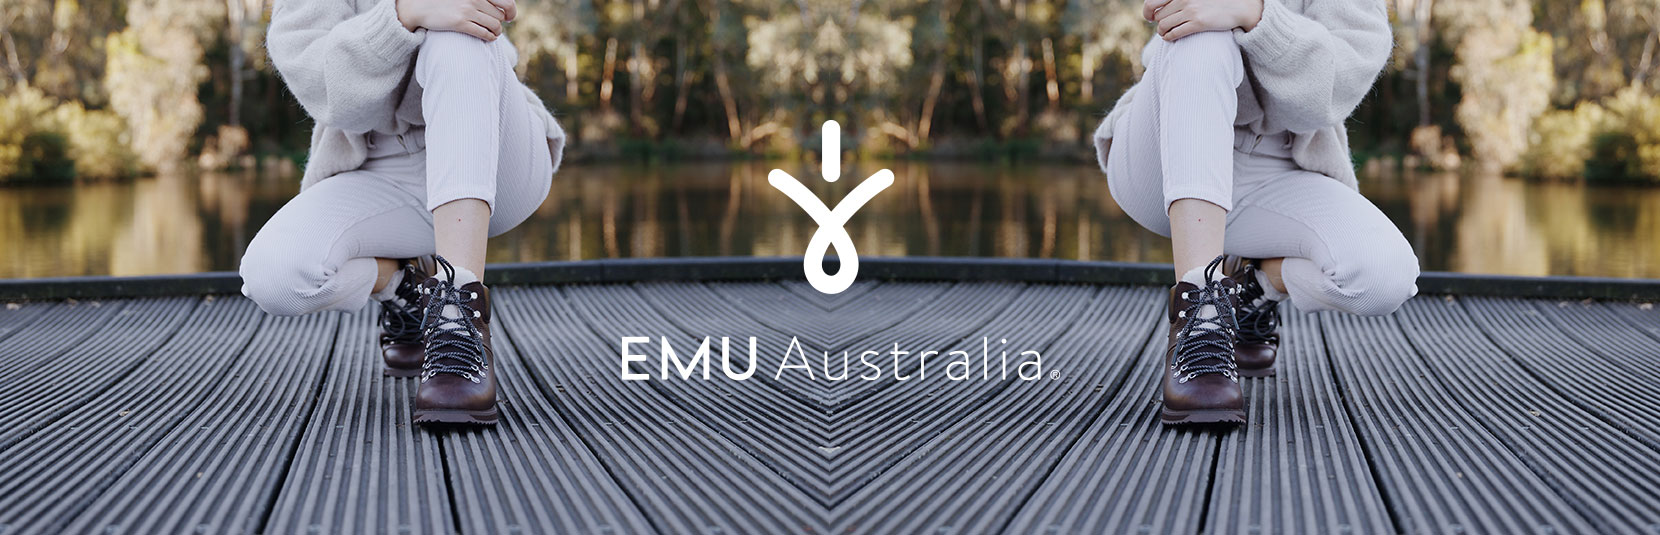 Emu banner